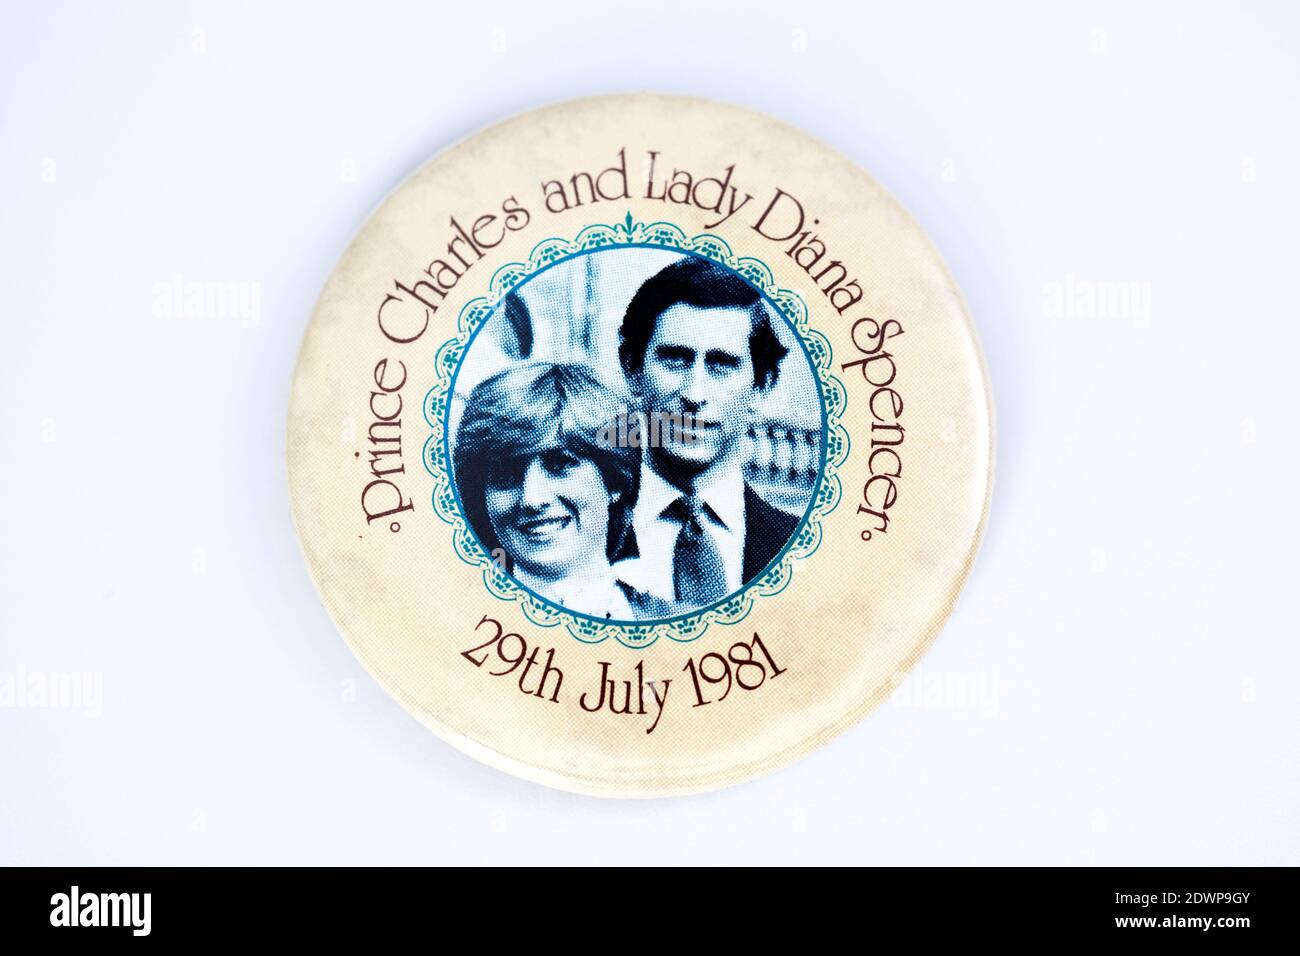 Prince Charles and Lady Diana Spencer 29 July 1981 Royal Wedding Badge Stock Photo